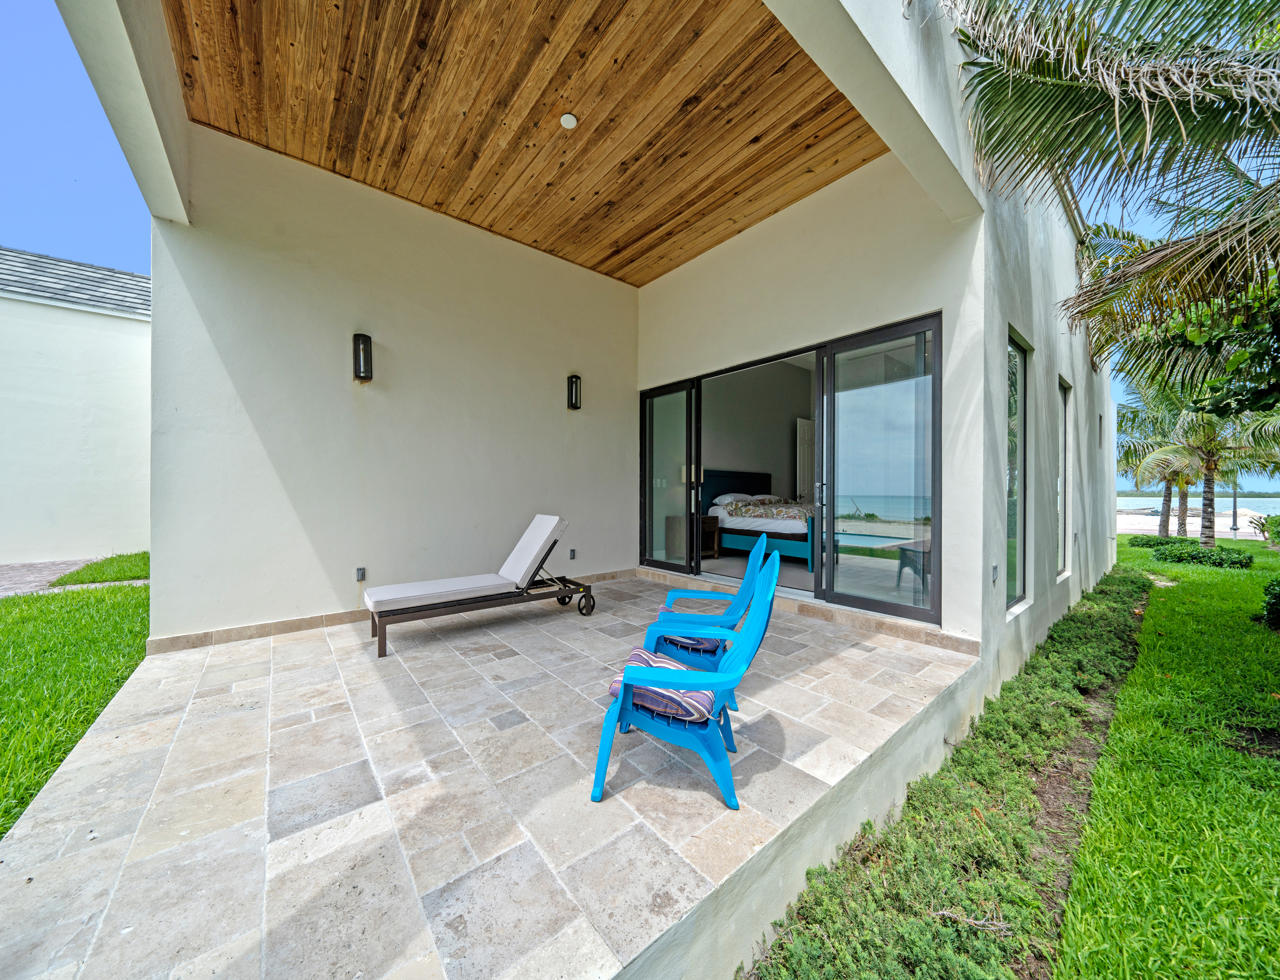 bimini luxury beachfront home with bay lot